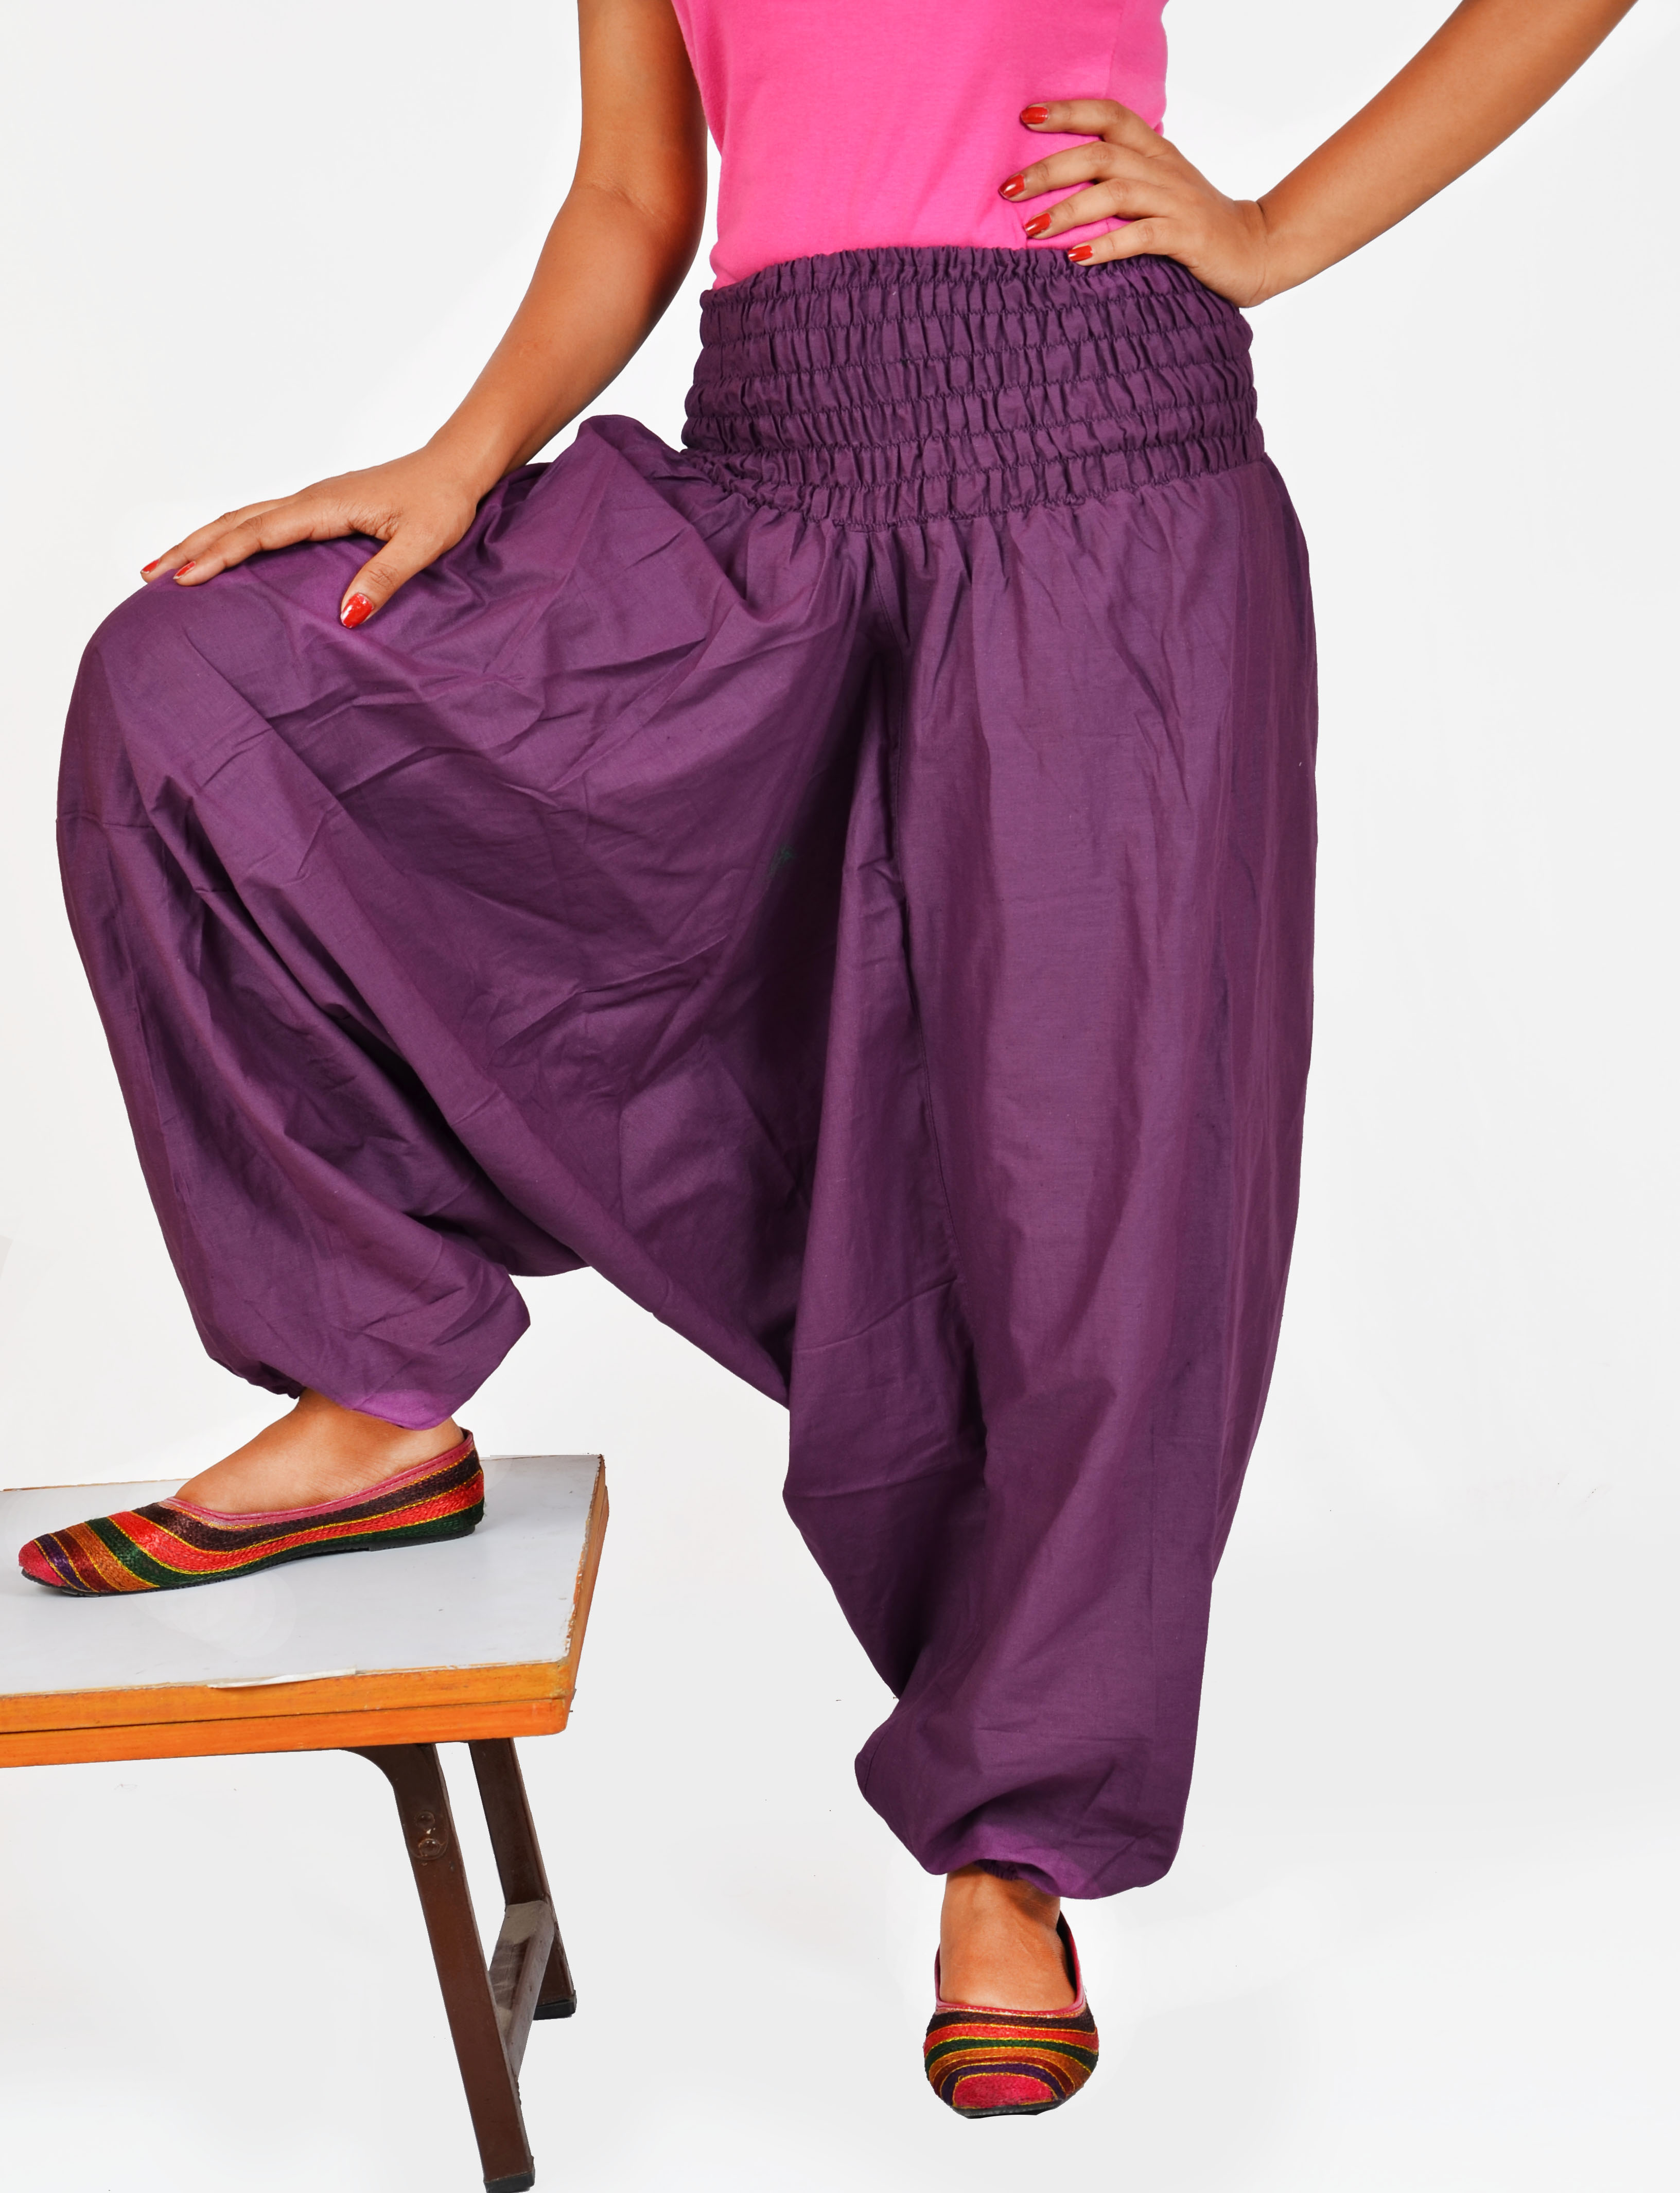 Indian Women's Girl's Burgundy Color Cotton Harem Pants Trouser